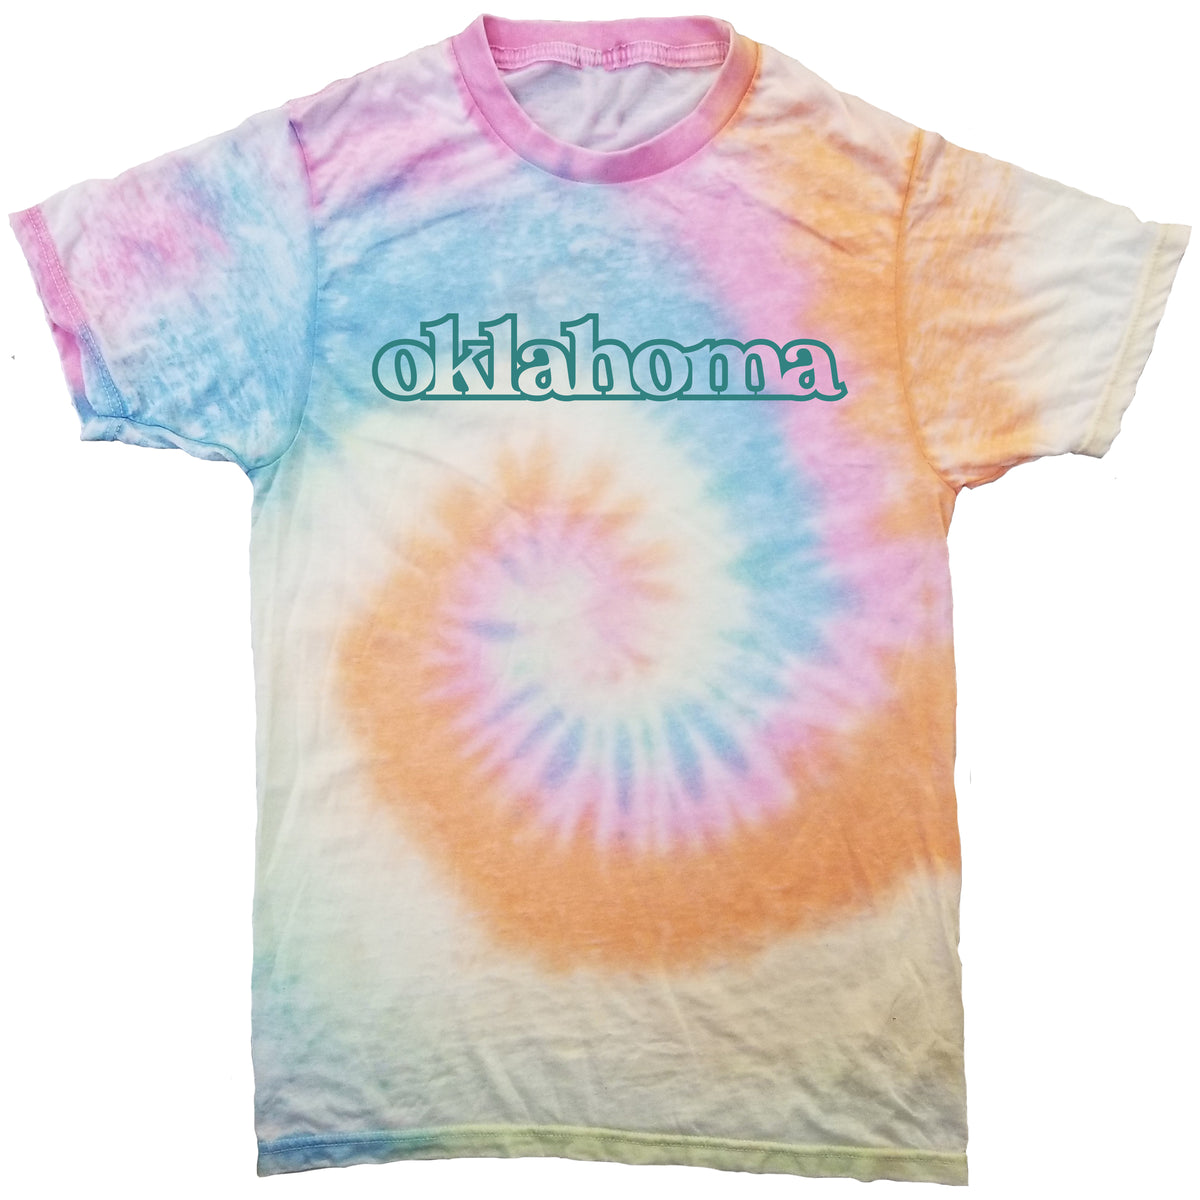 Oklahoma Pastel Tie-Dye T-Shirt